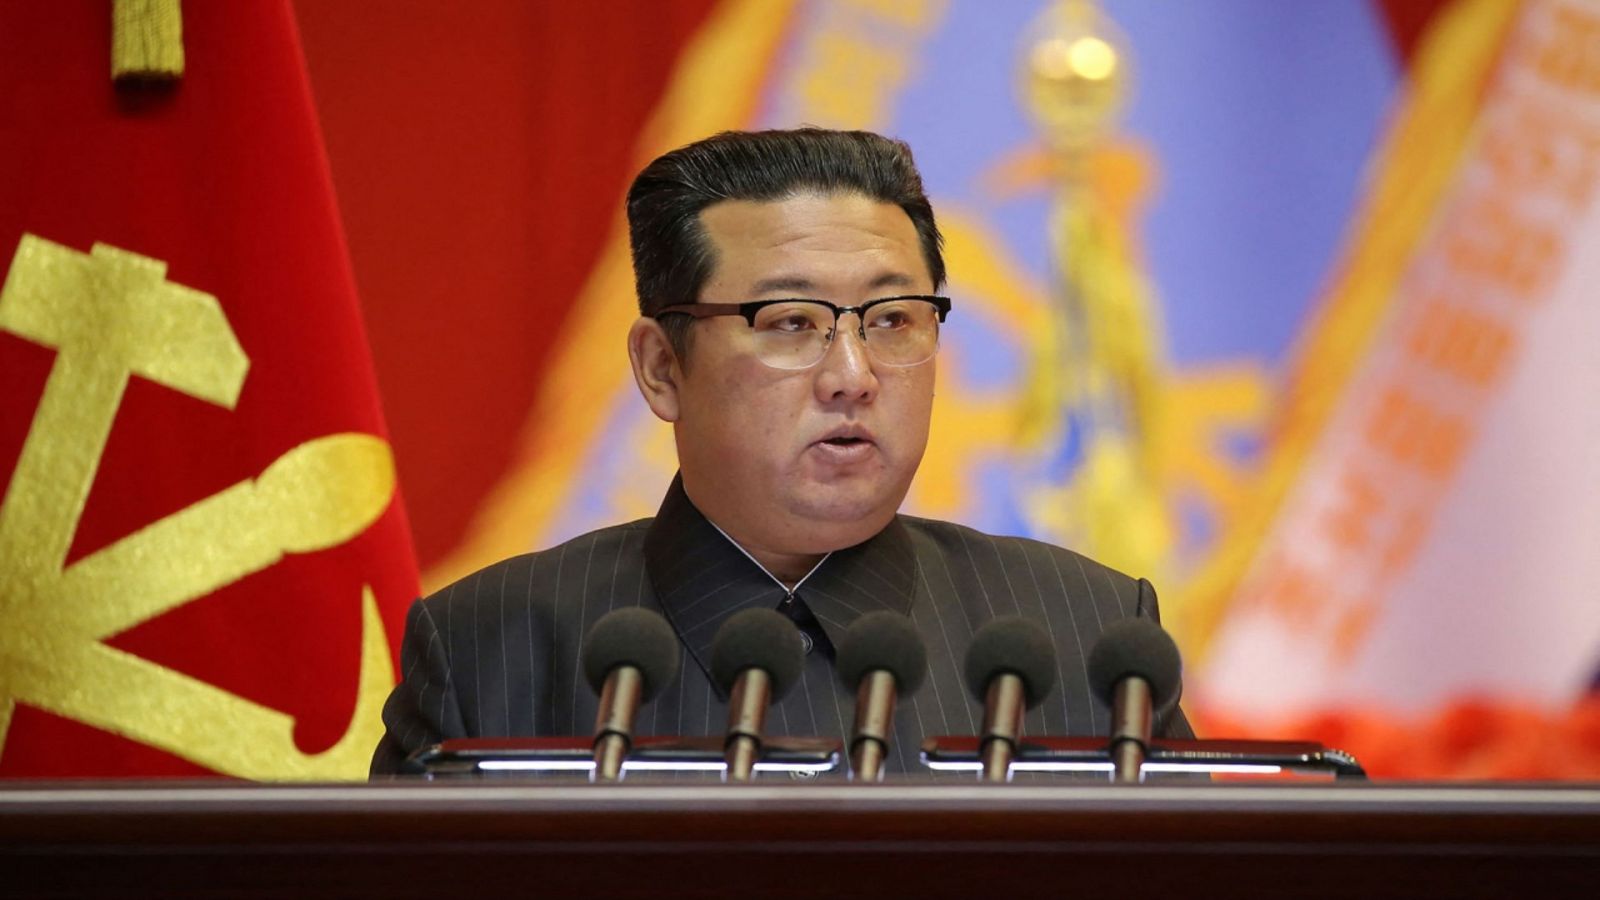 Una imagen del líder norcoreano, Kim Jong-un.